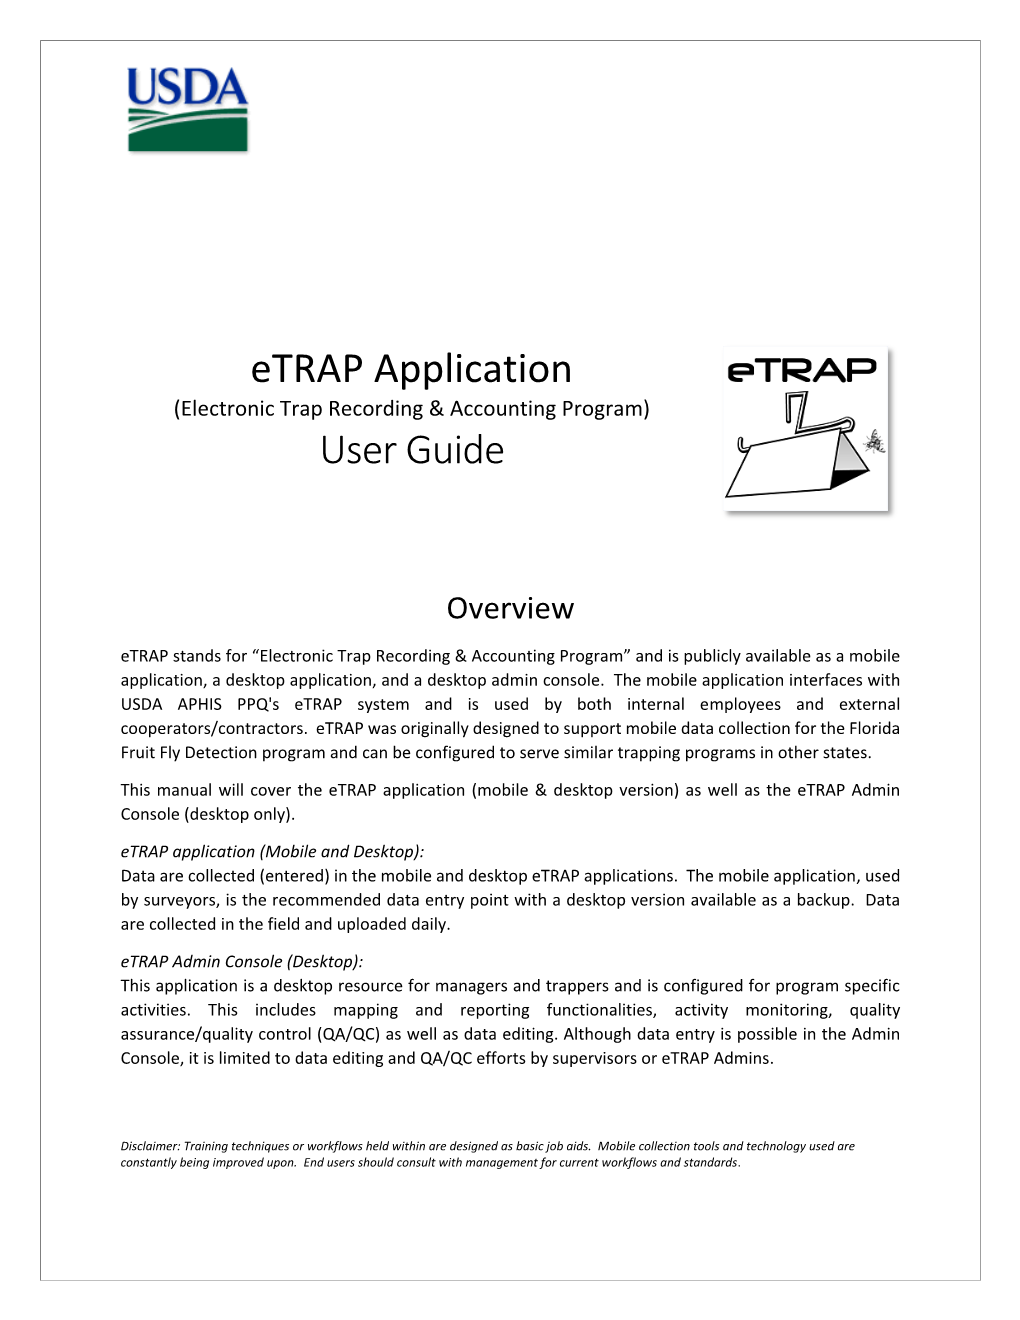 Etrap Application User Guide